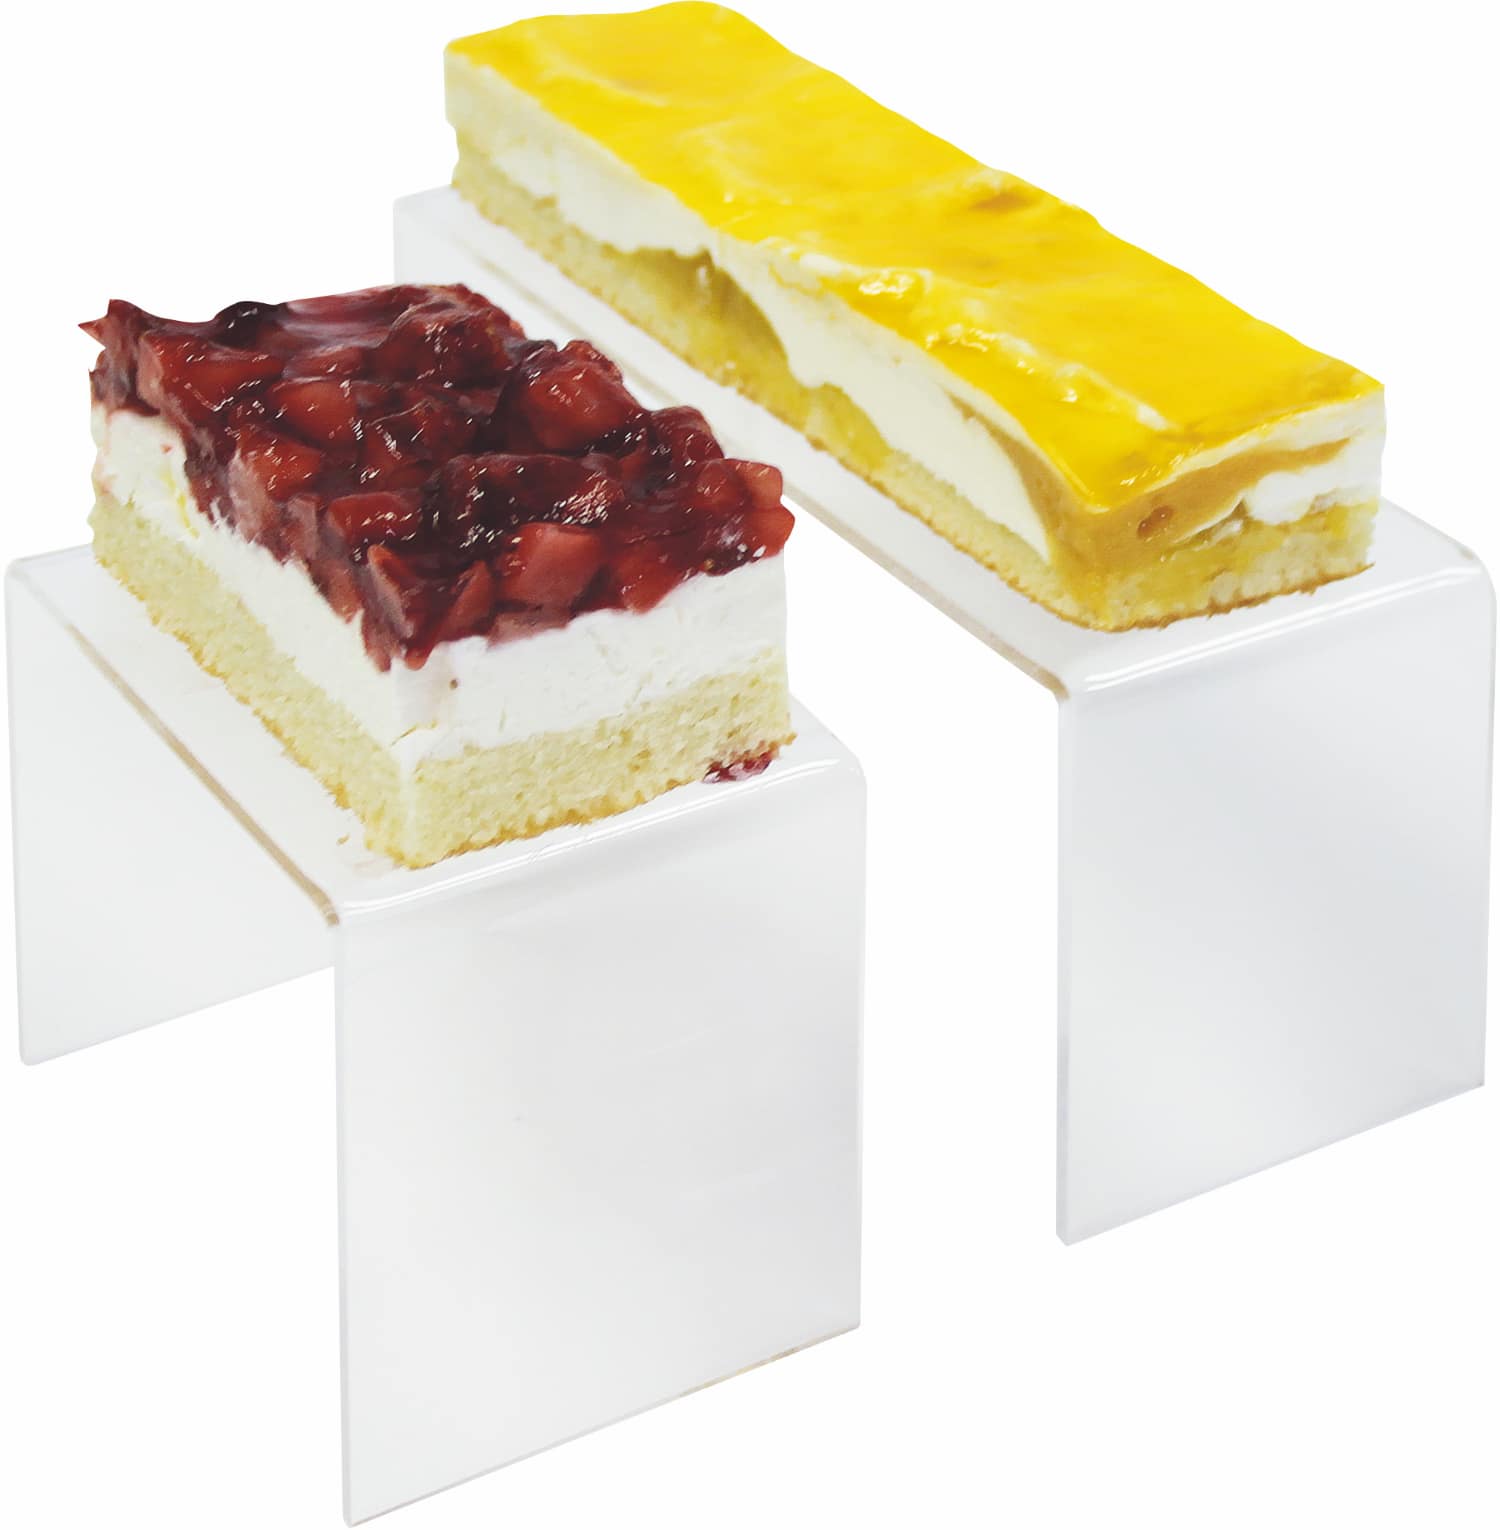 Display riser for sliced cakes 227575